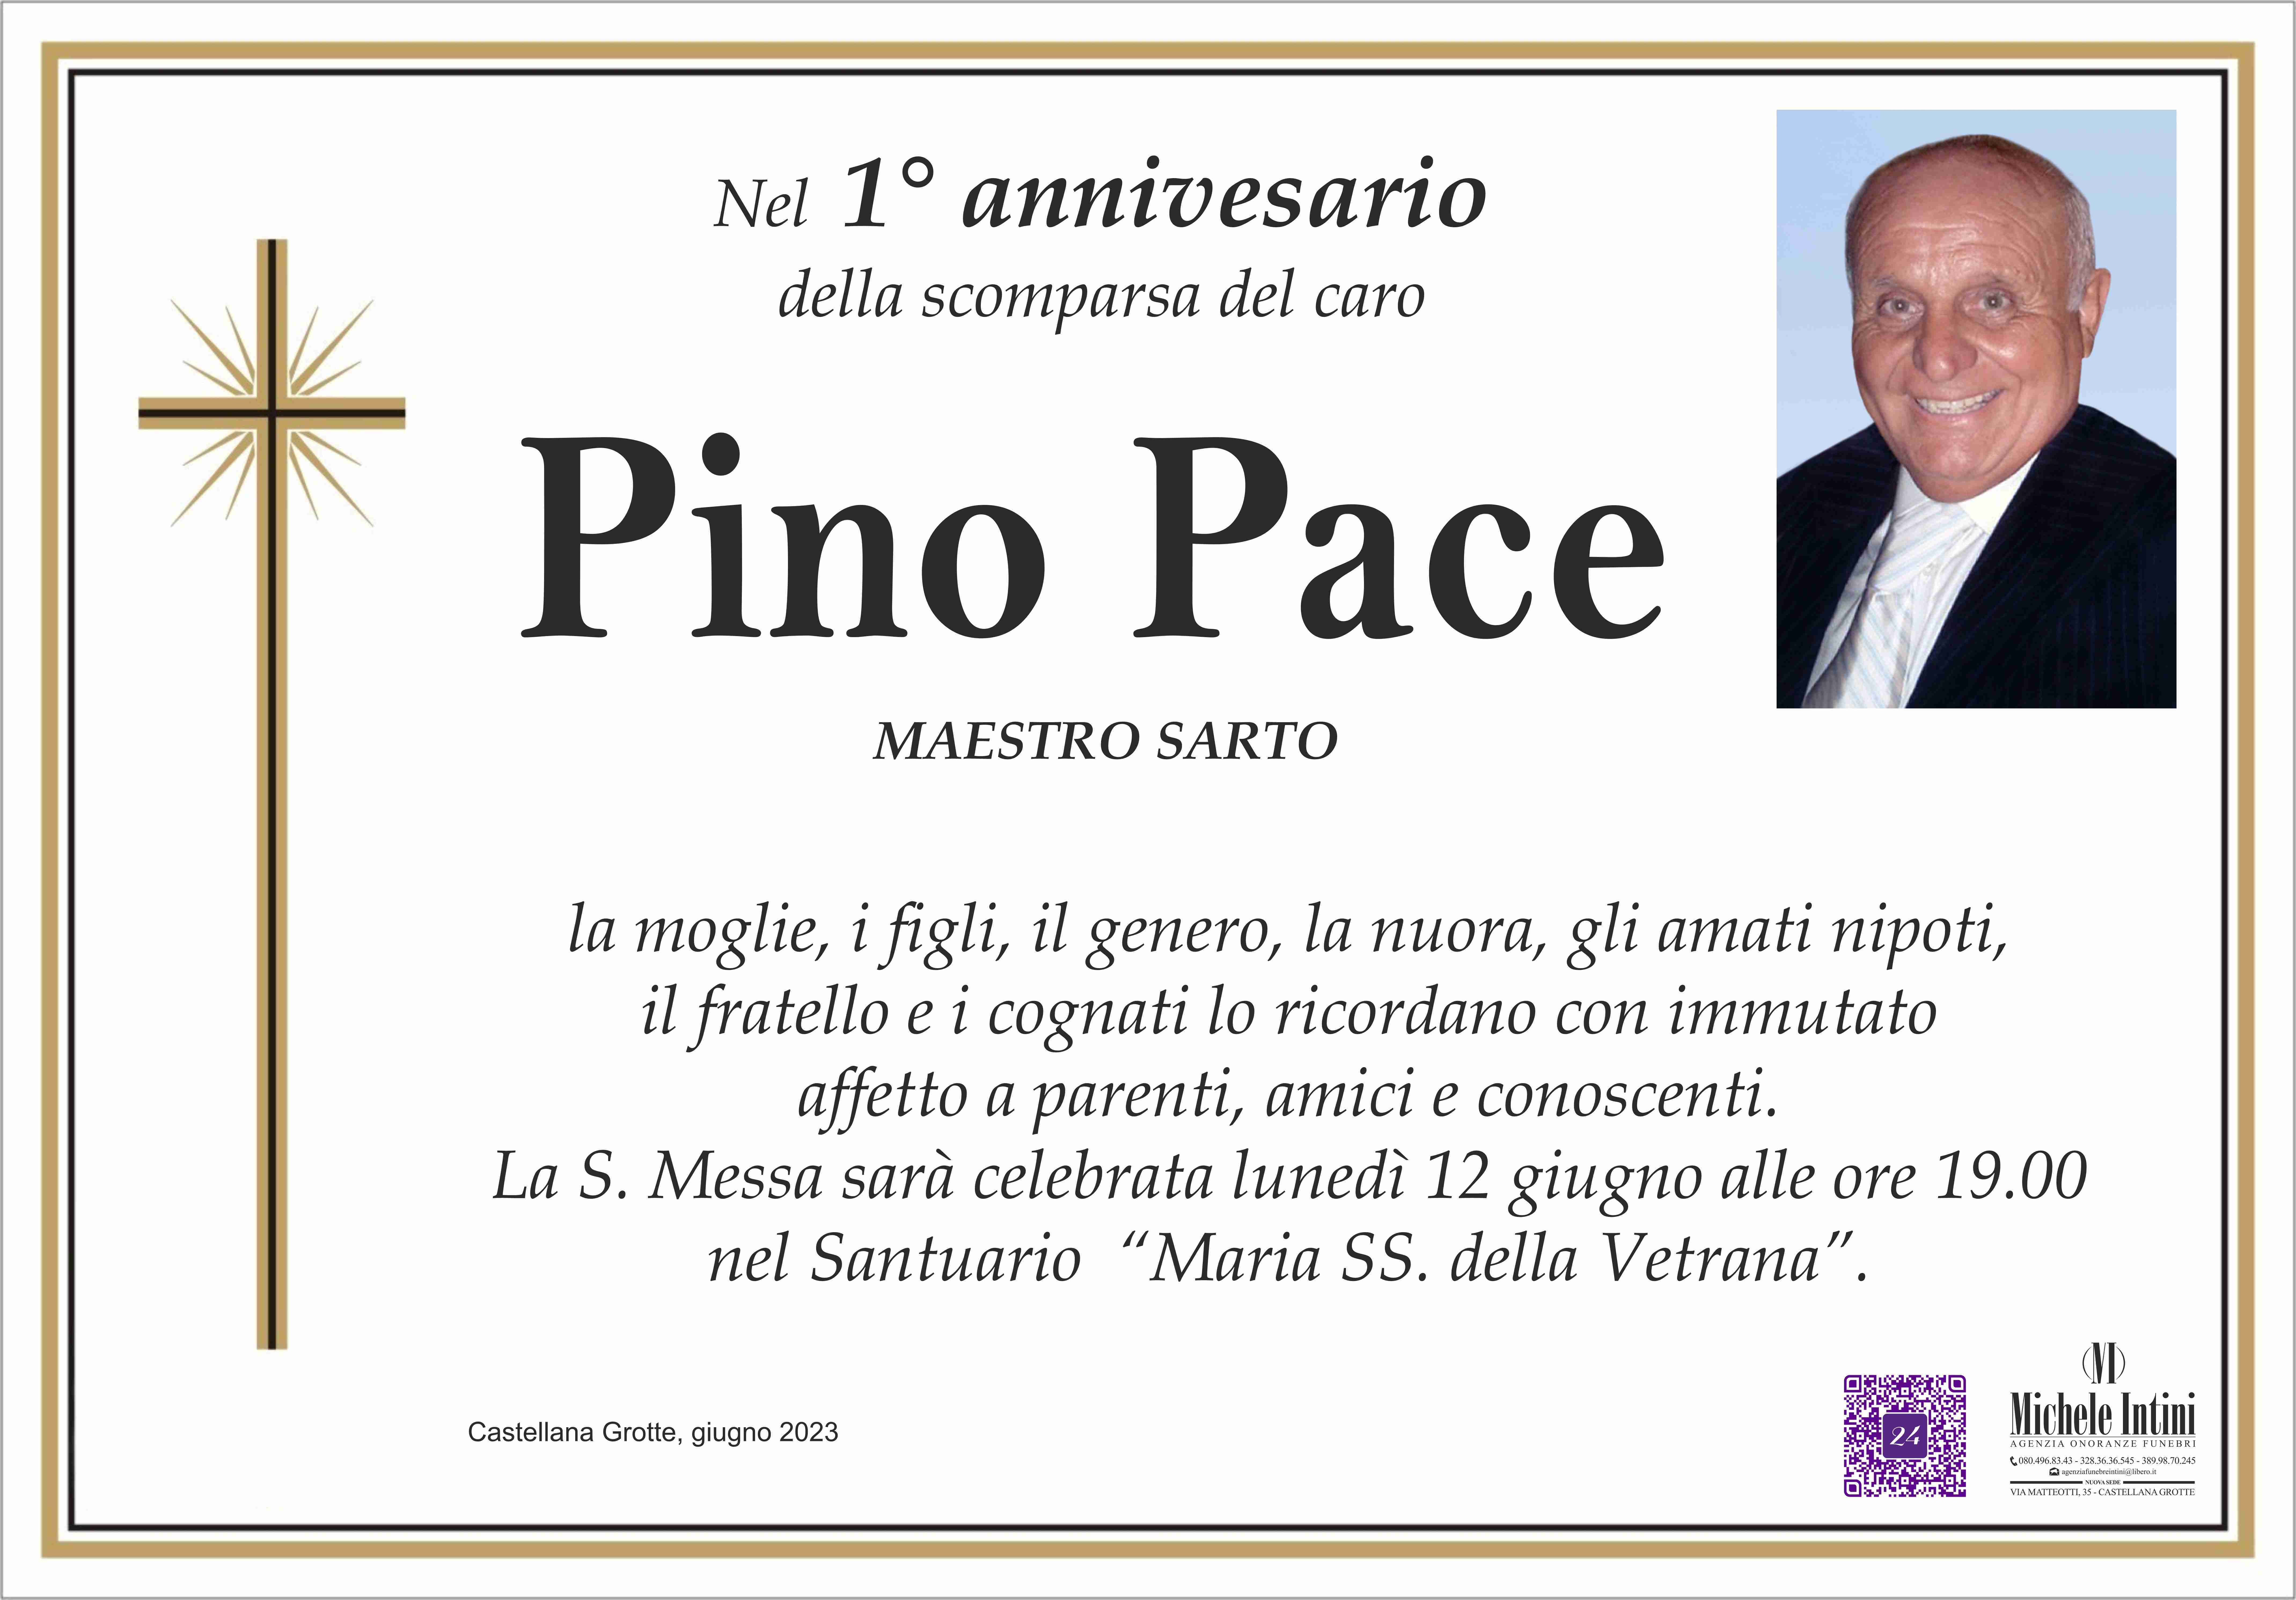 Pino Pace